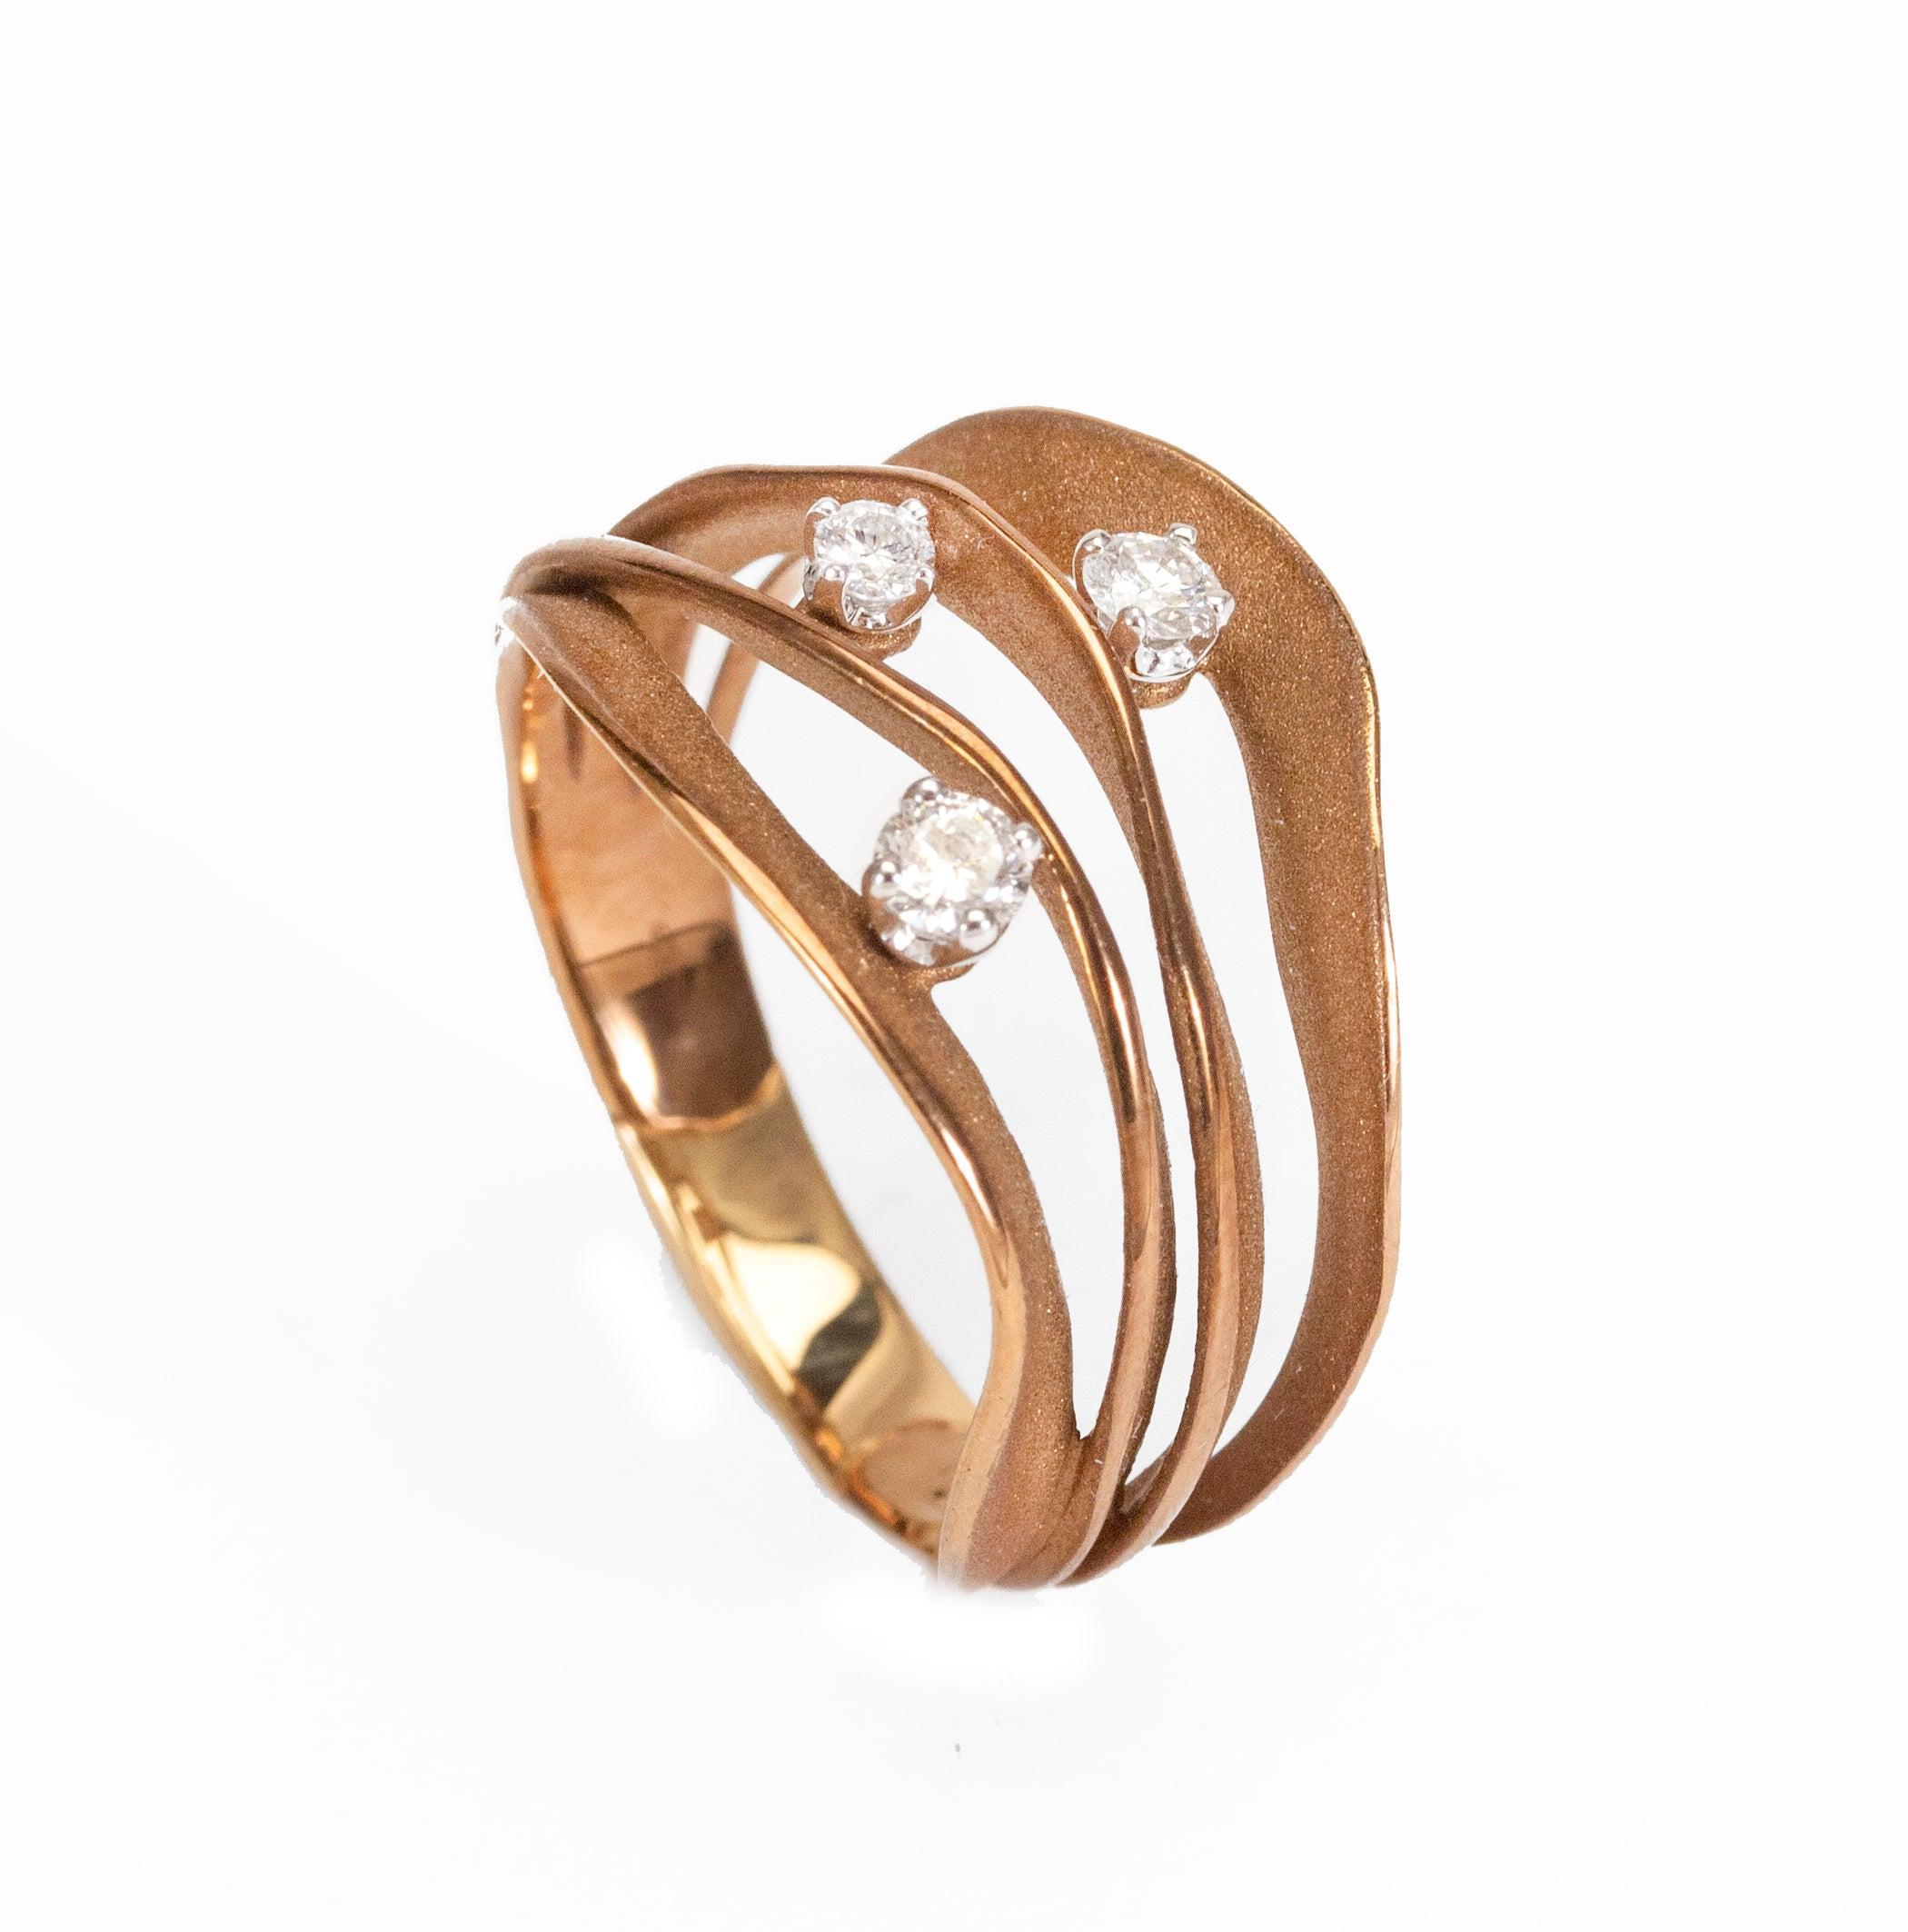 Im Angebot: Annamaria Cammilli „Dune Royal“ Ring mit Diamanten aus 18 Karat braunem Schokoladengold () 2